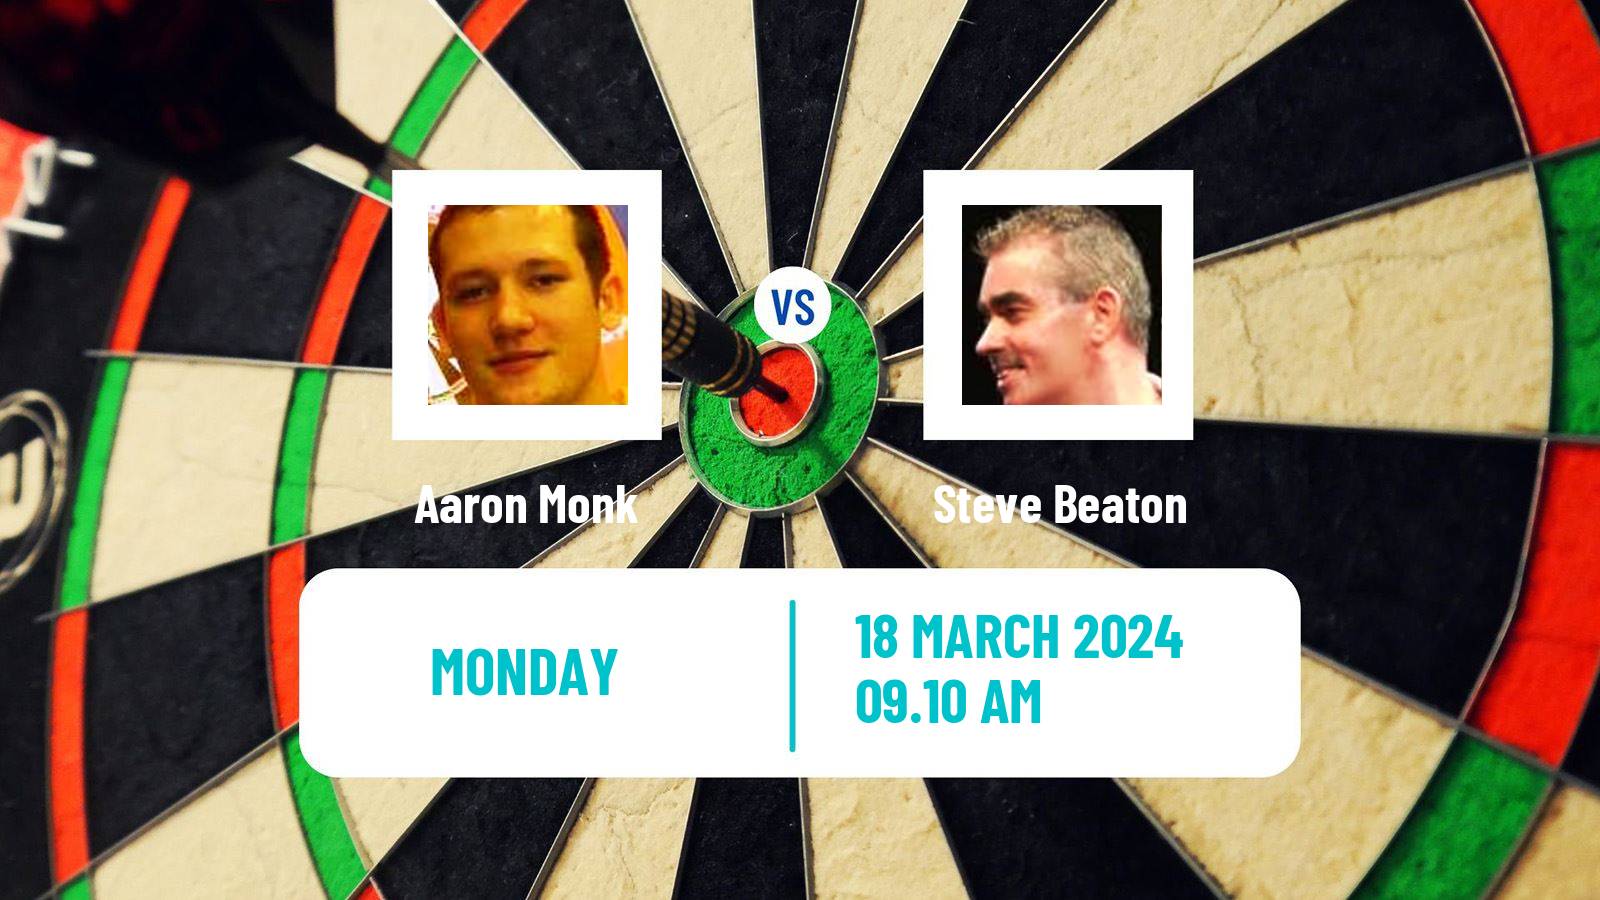 Darts Players Championship 5 Aaron Monk - Steve Beaton